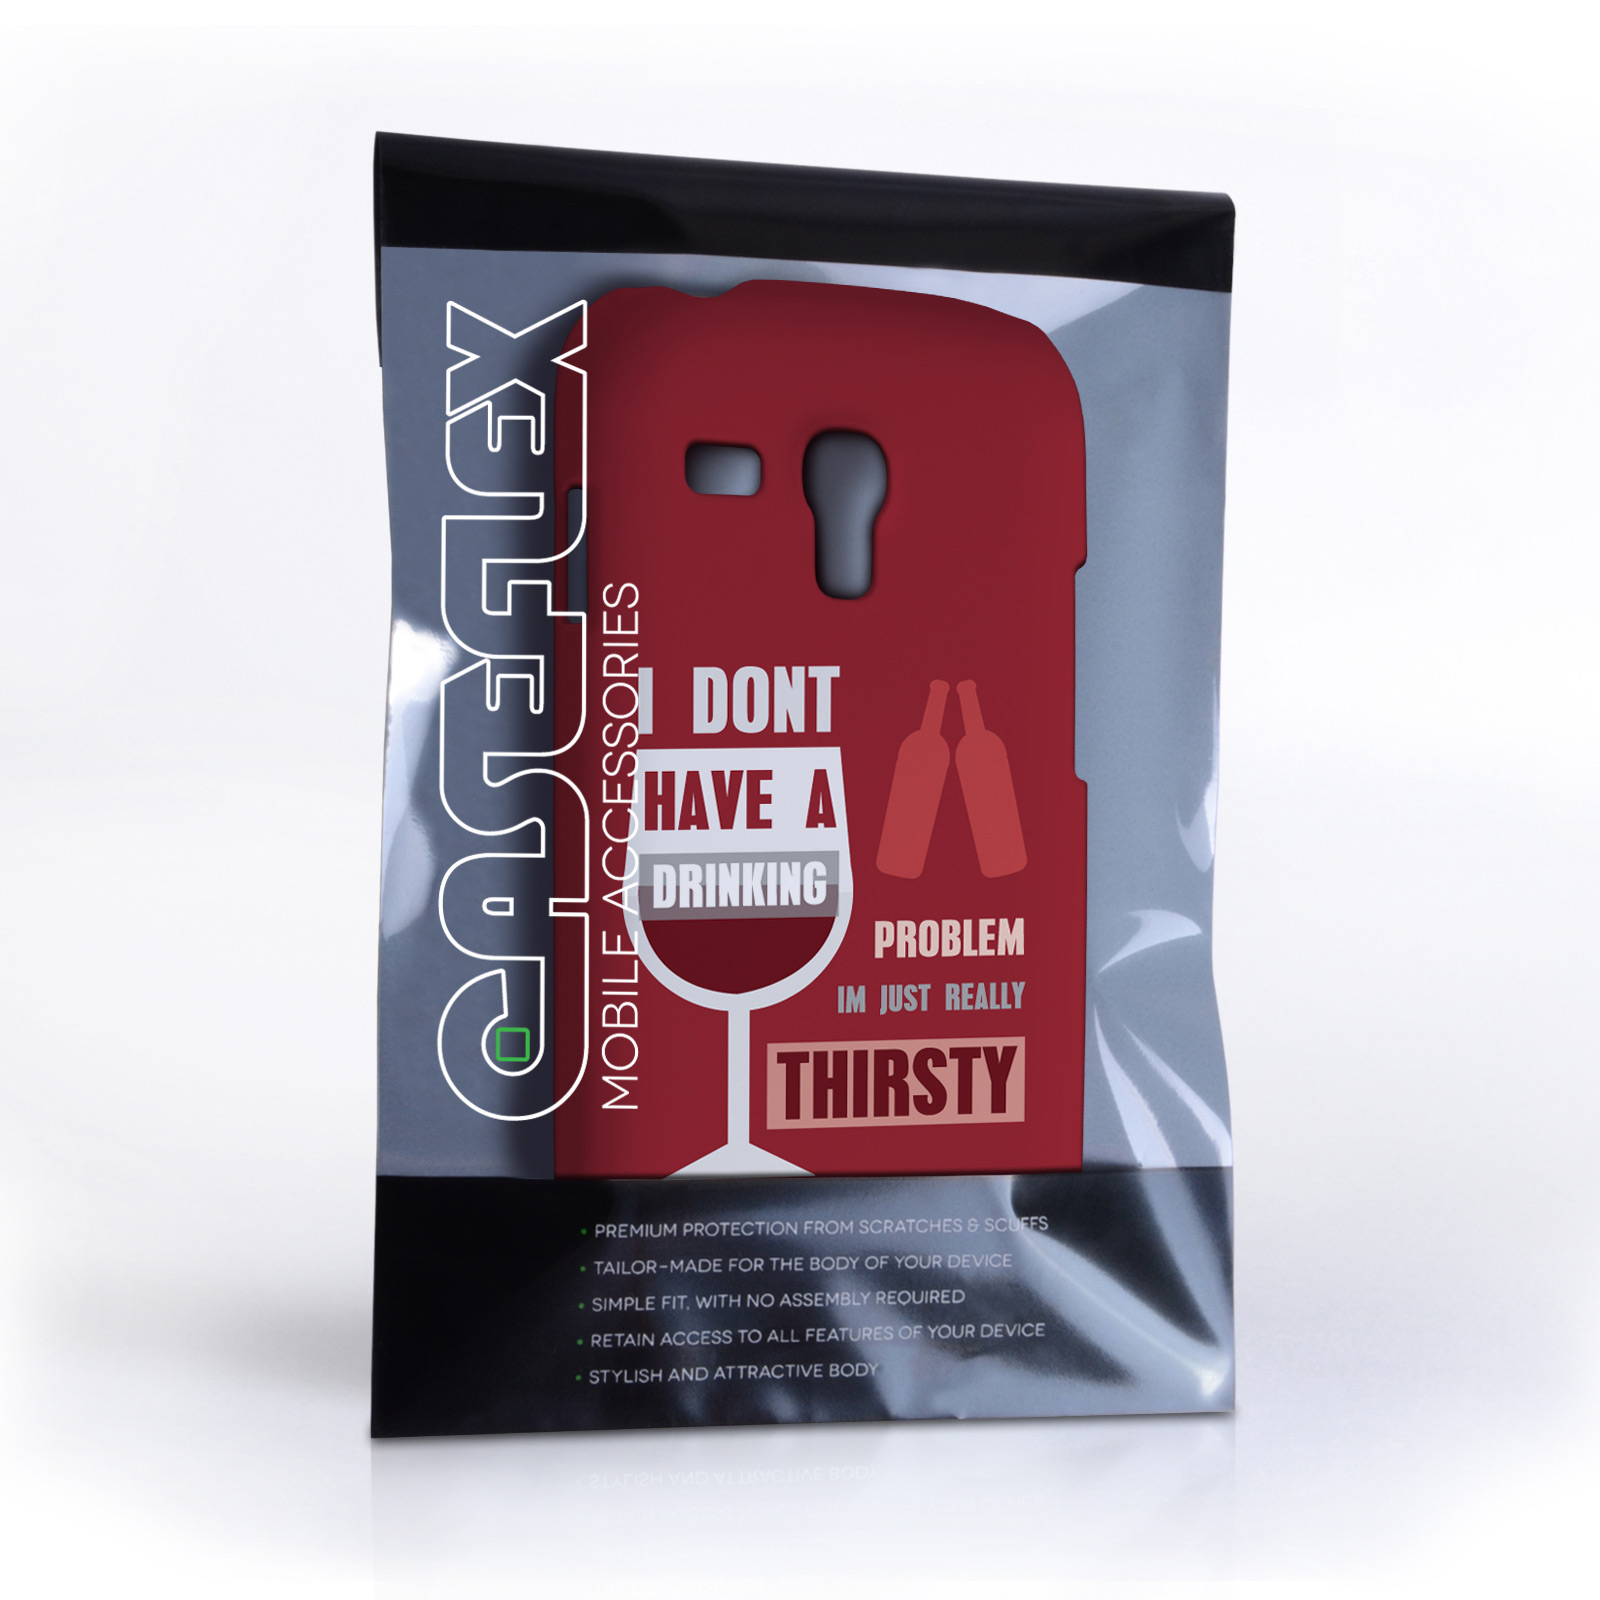 Caseflex Samsung Galaxy S3 Mini ‘Really Thirsty’ Quote Hard Case – Red